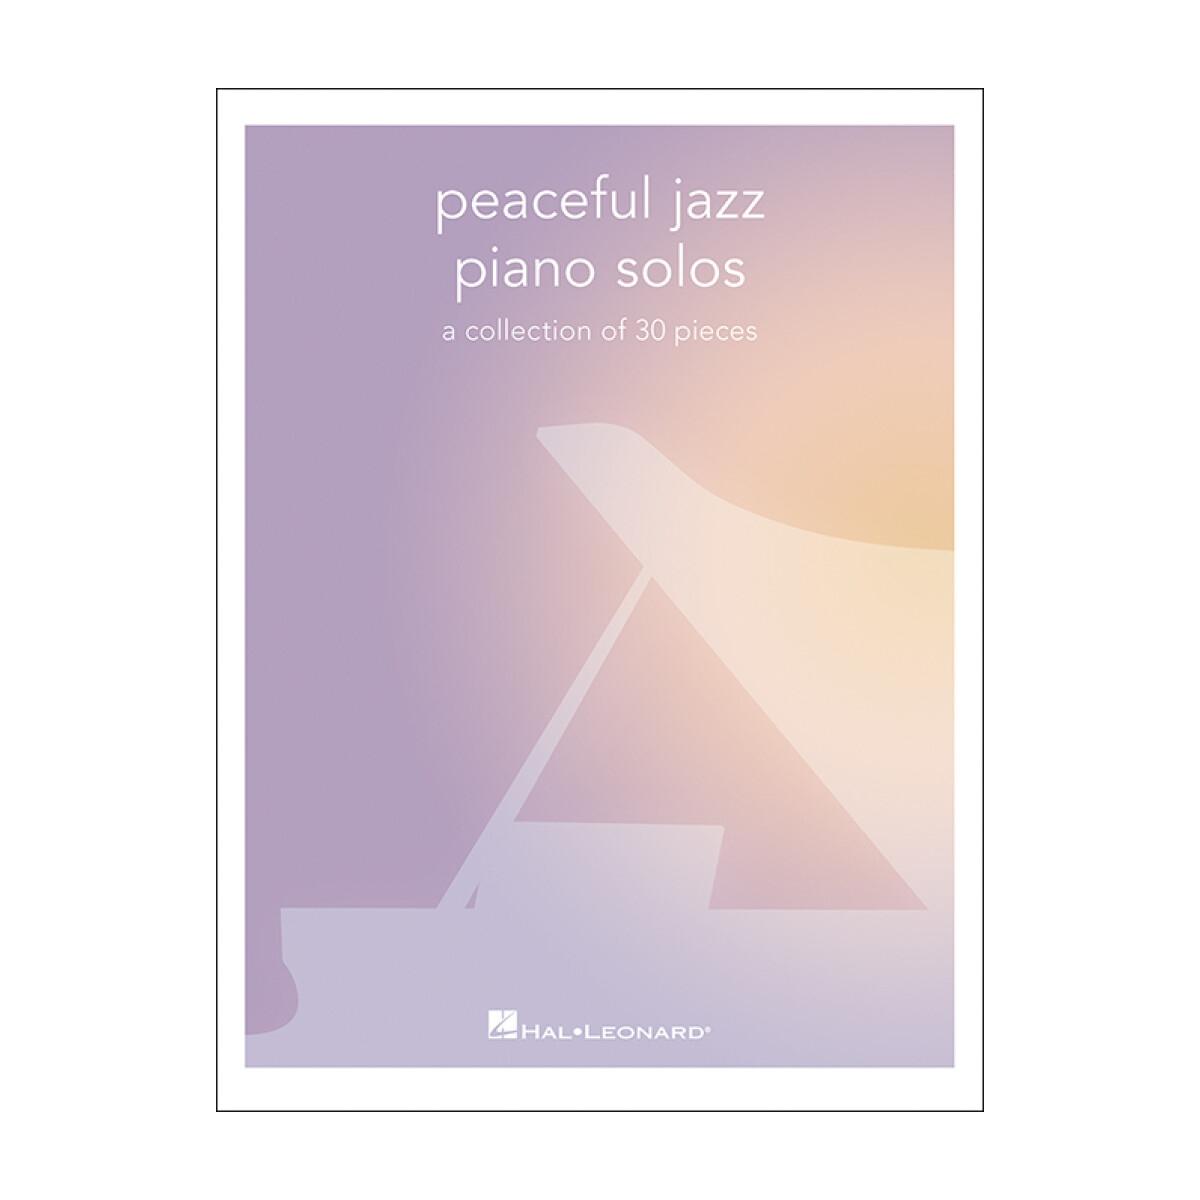 Peaceful jazz piano solos